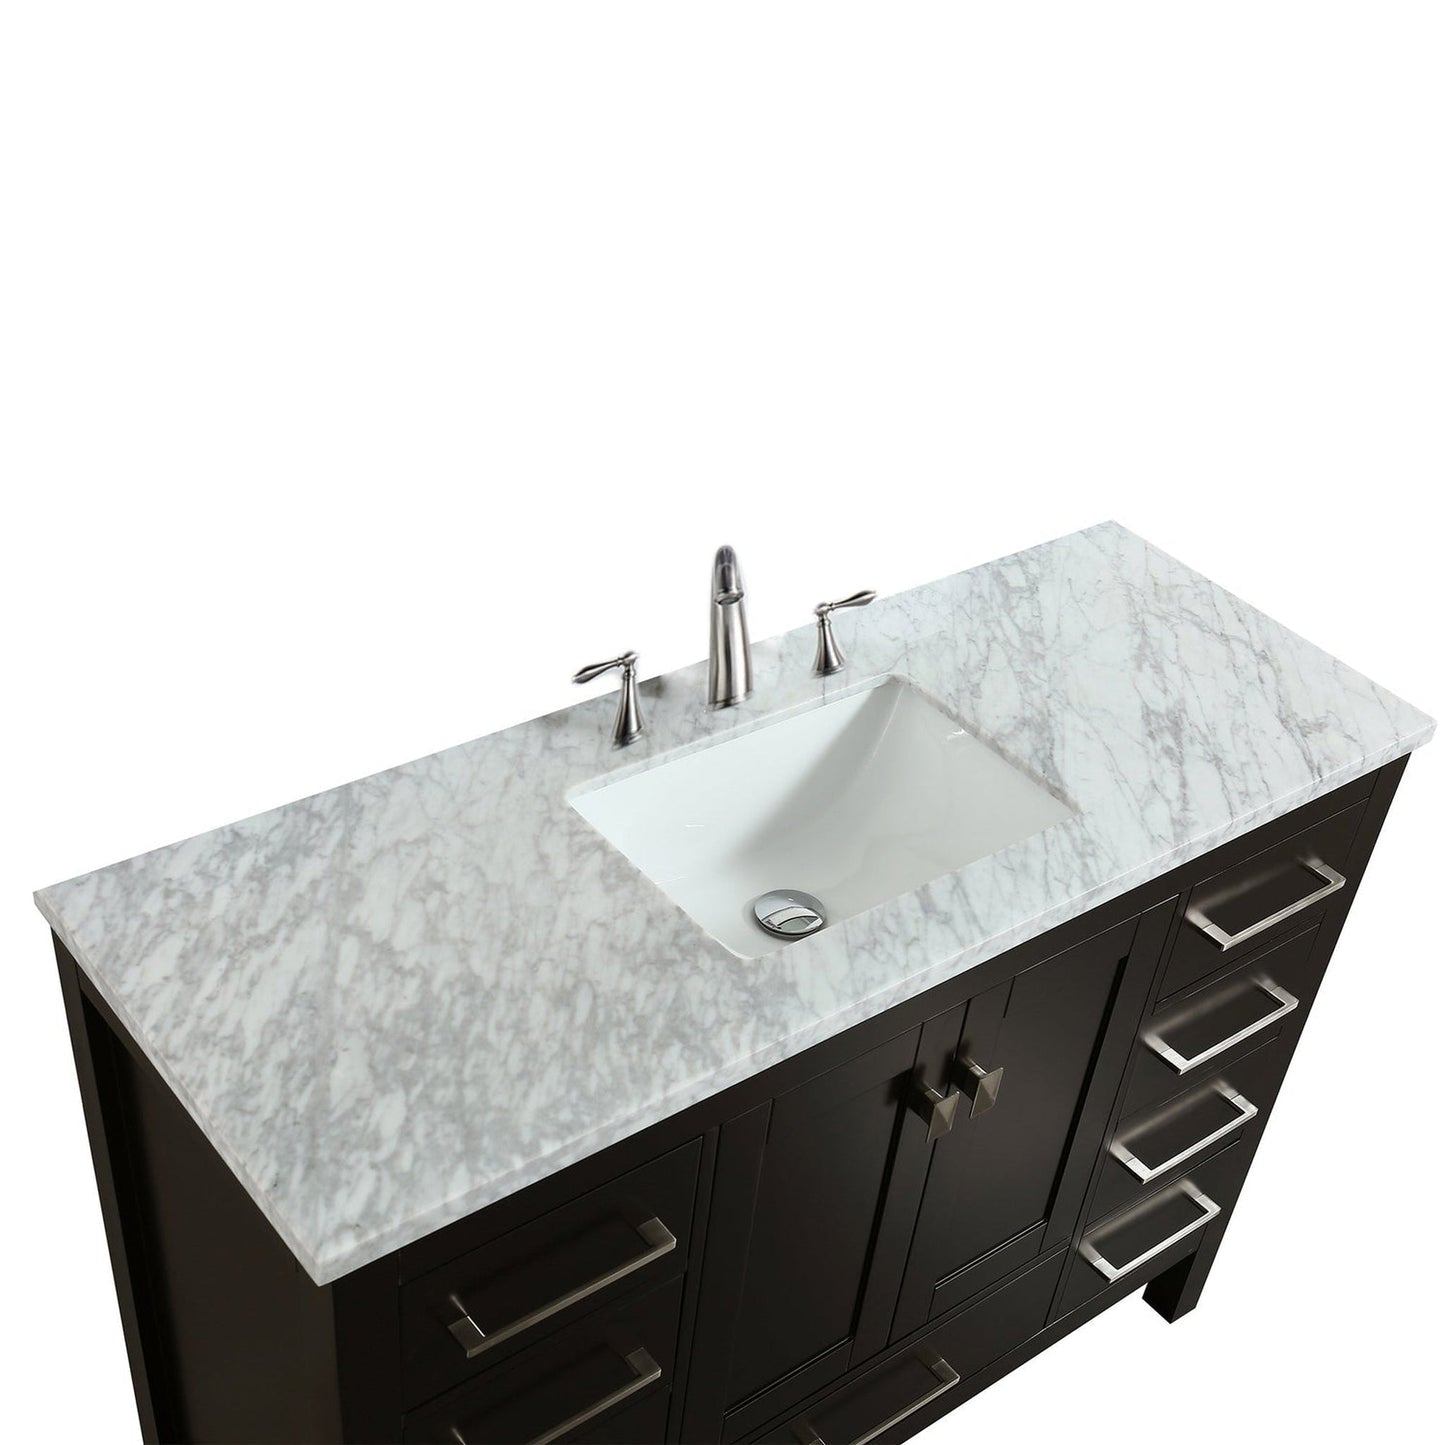 Eviva Aberdeen 42” x 34” Espresso Freestanding Bathroom Vanity With Single Undermount Sink